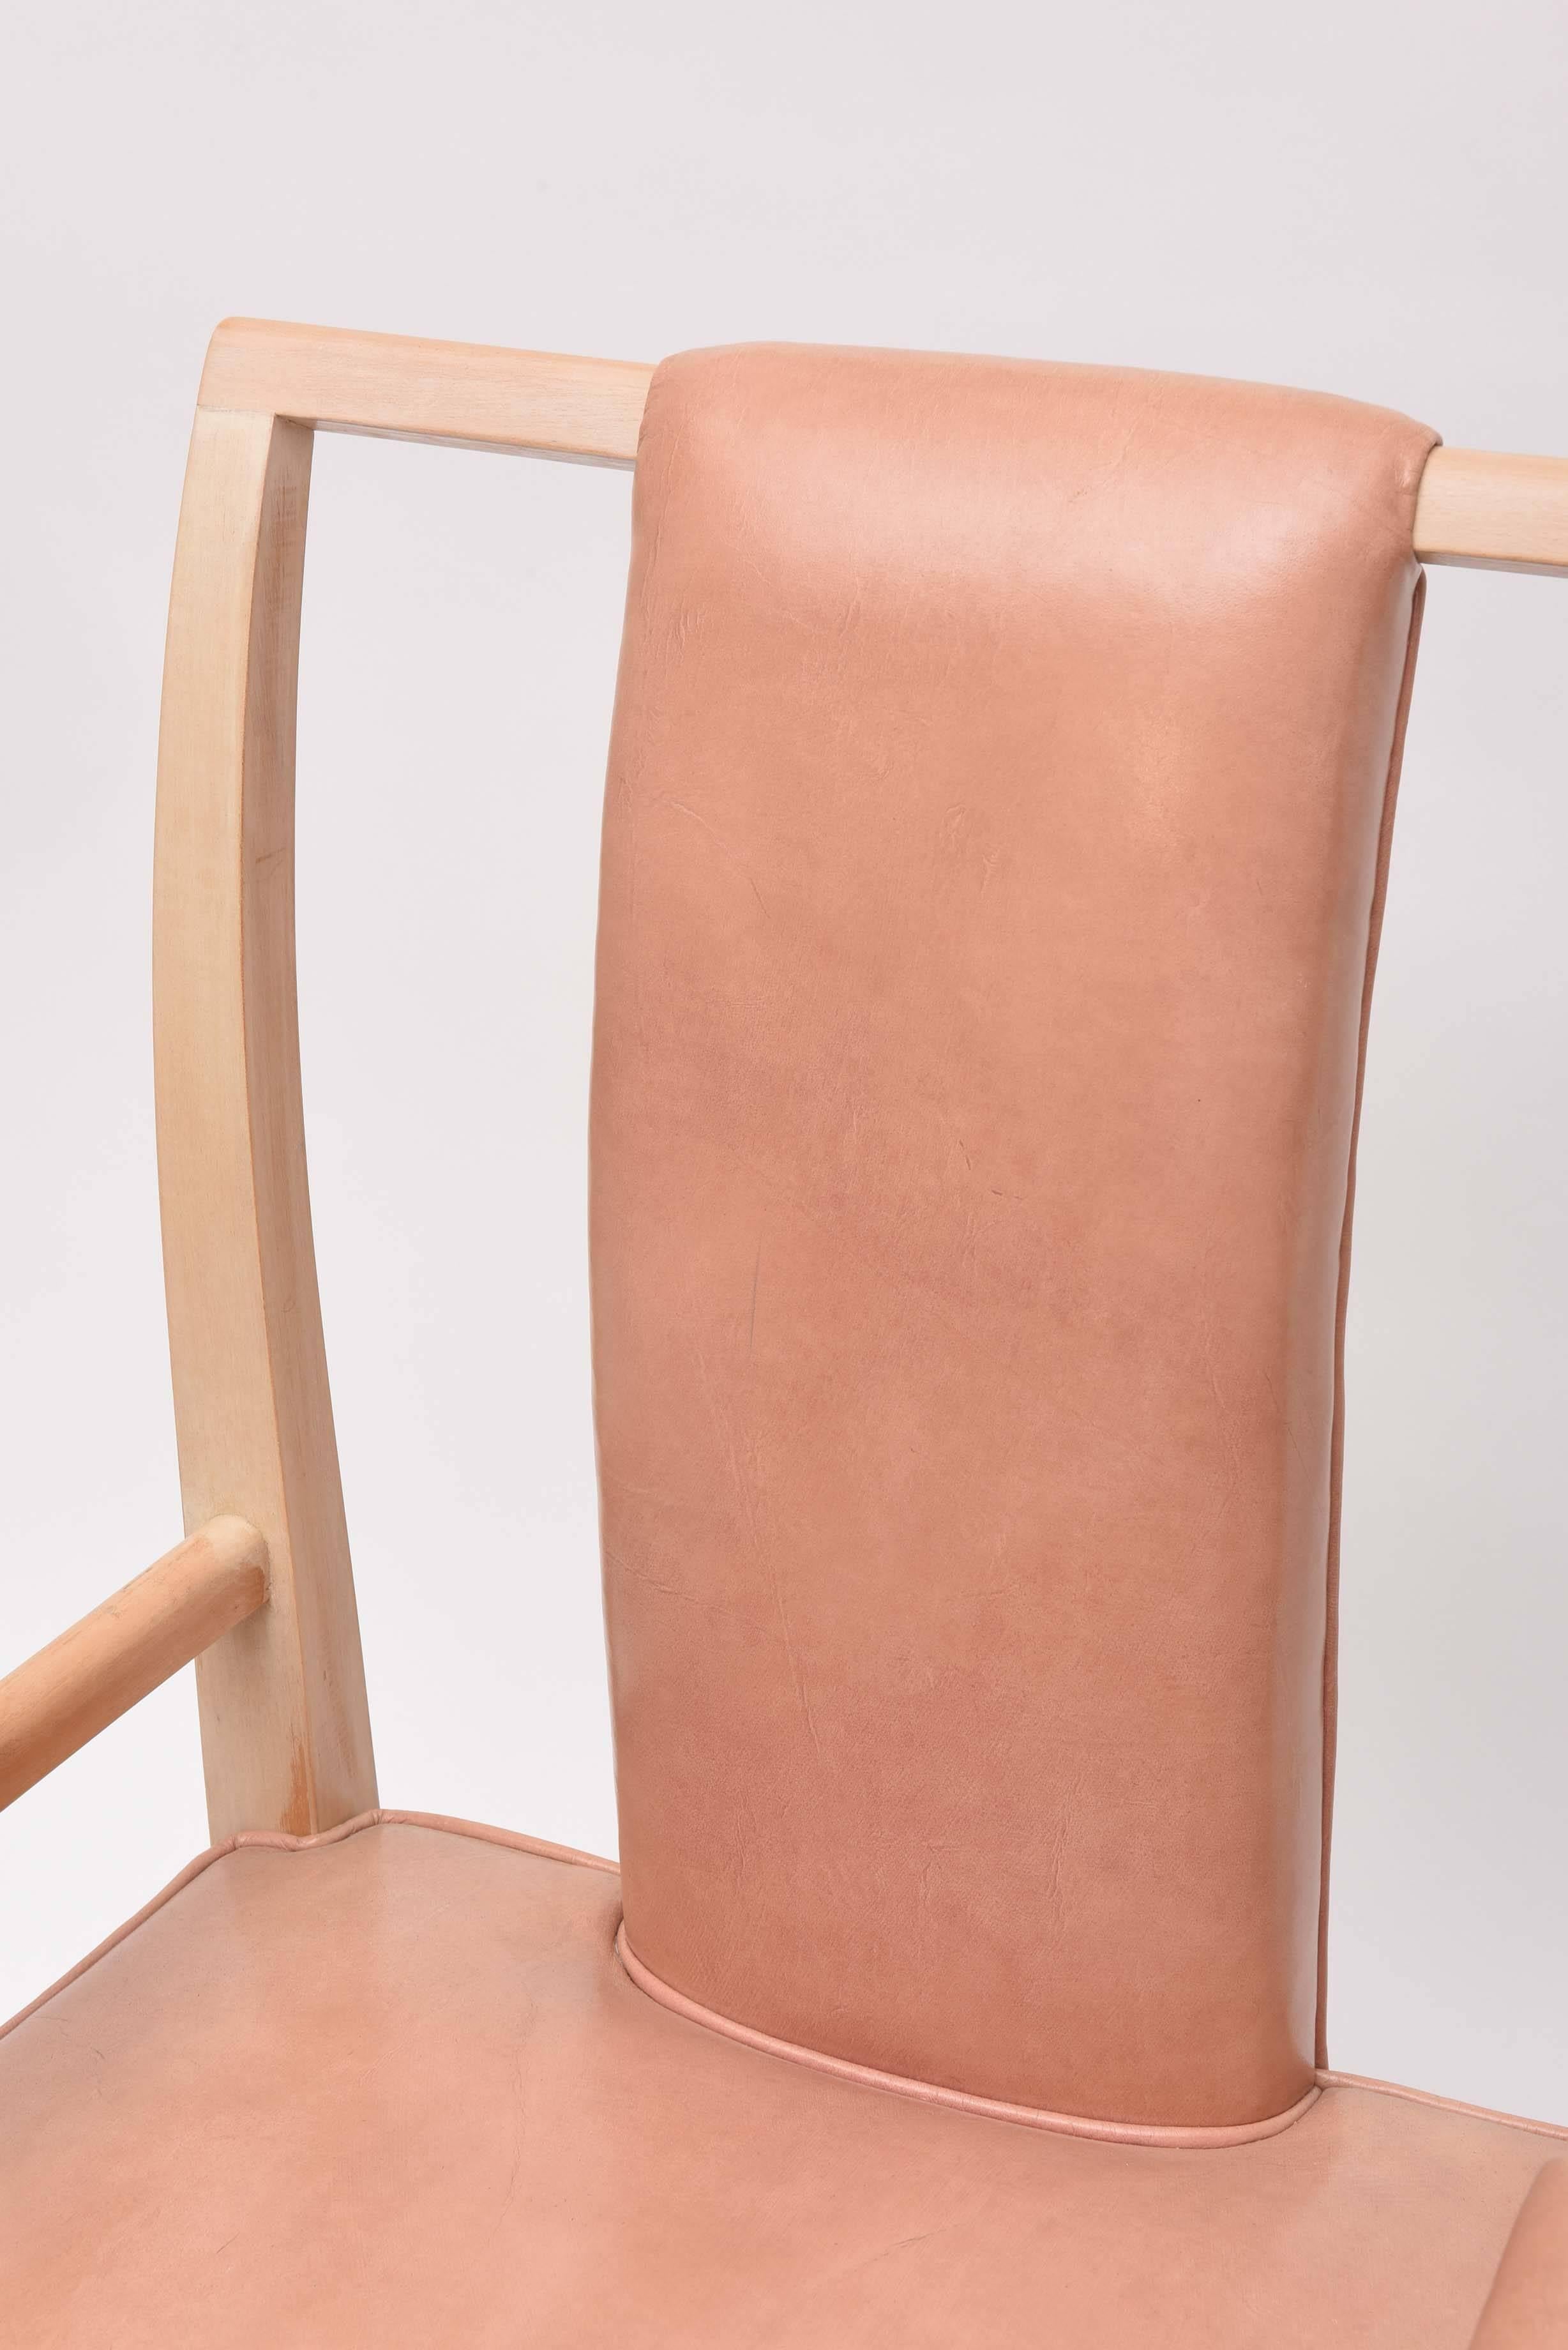 American Tommi Parzinger Slat Back Chairs